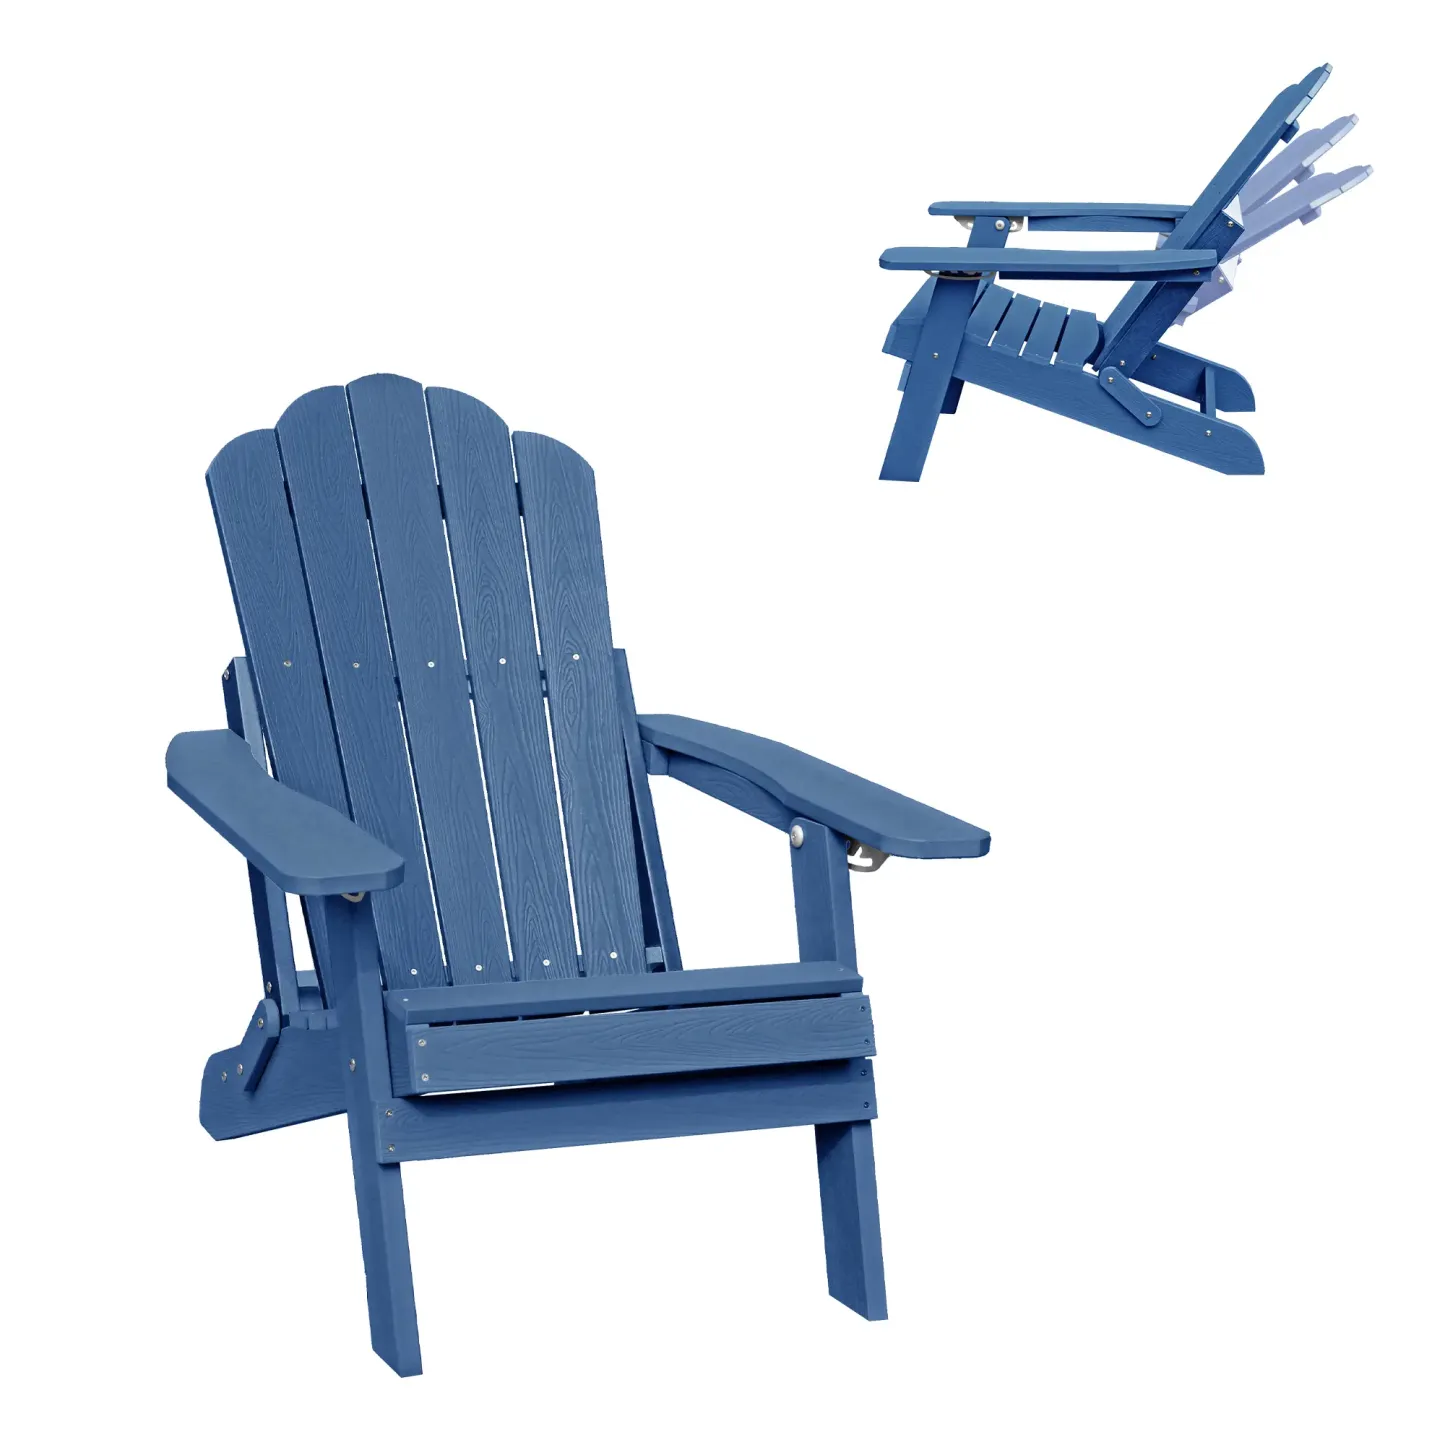 Mondawe 2-Piece HIPS Barstool Adirondack Chair and Tray Set